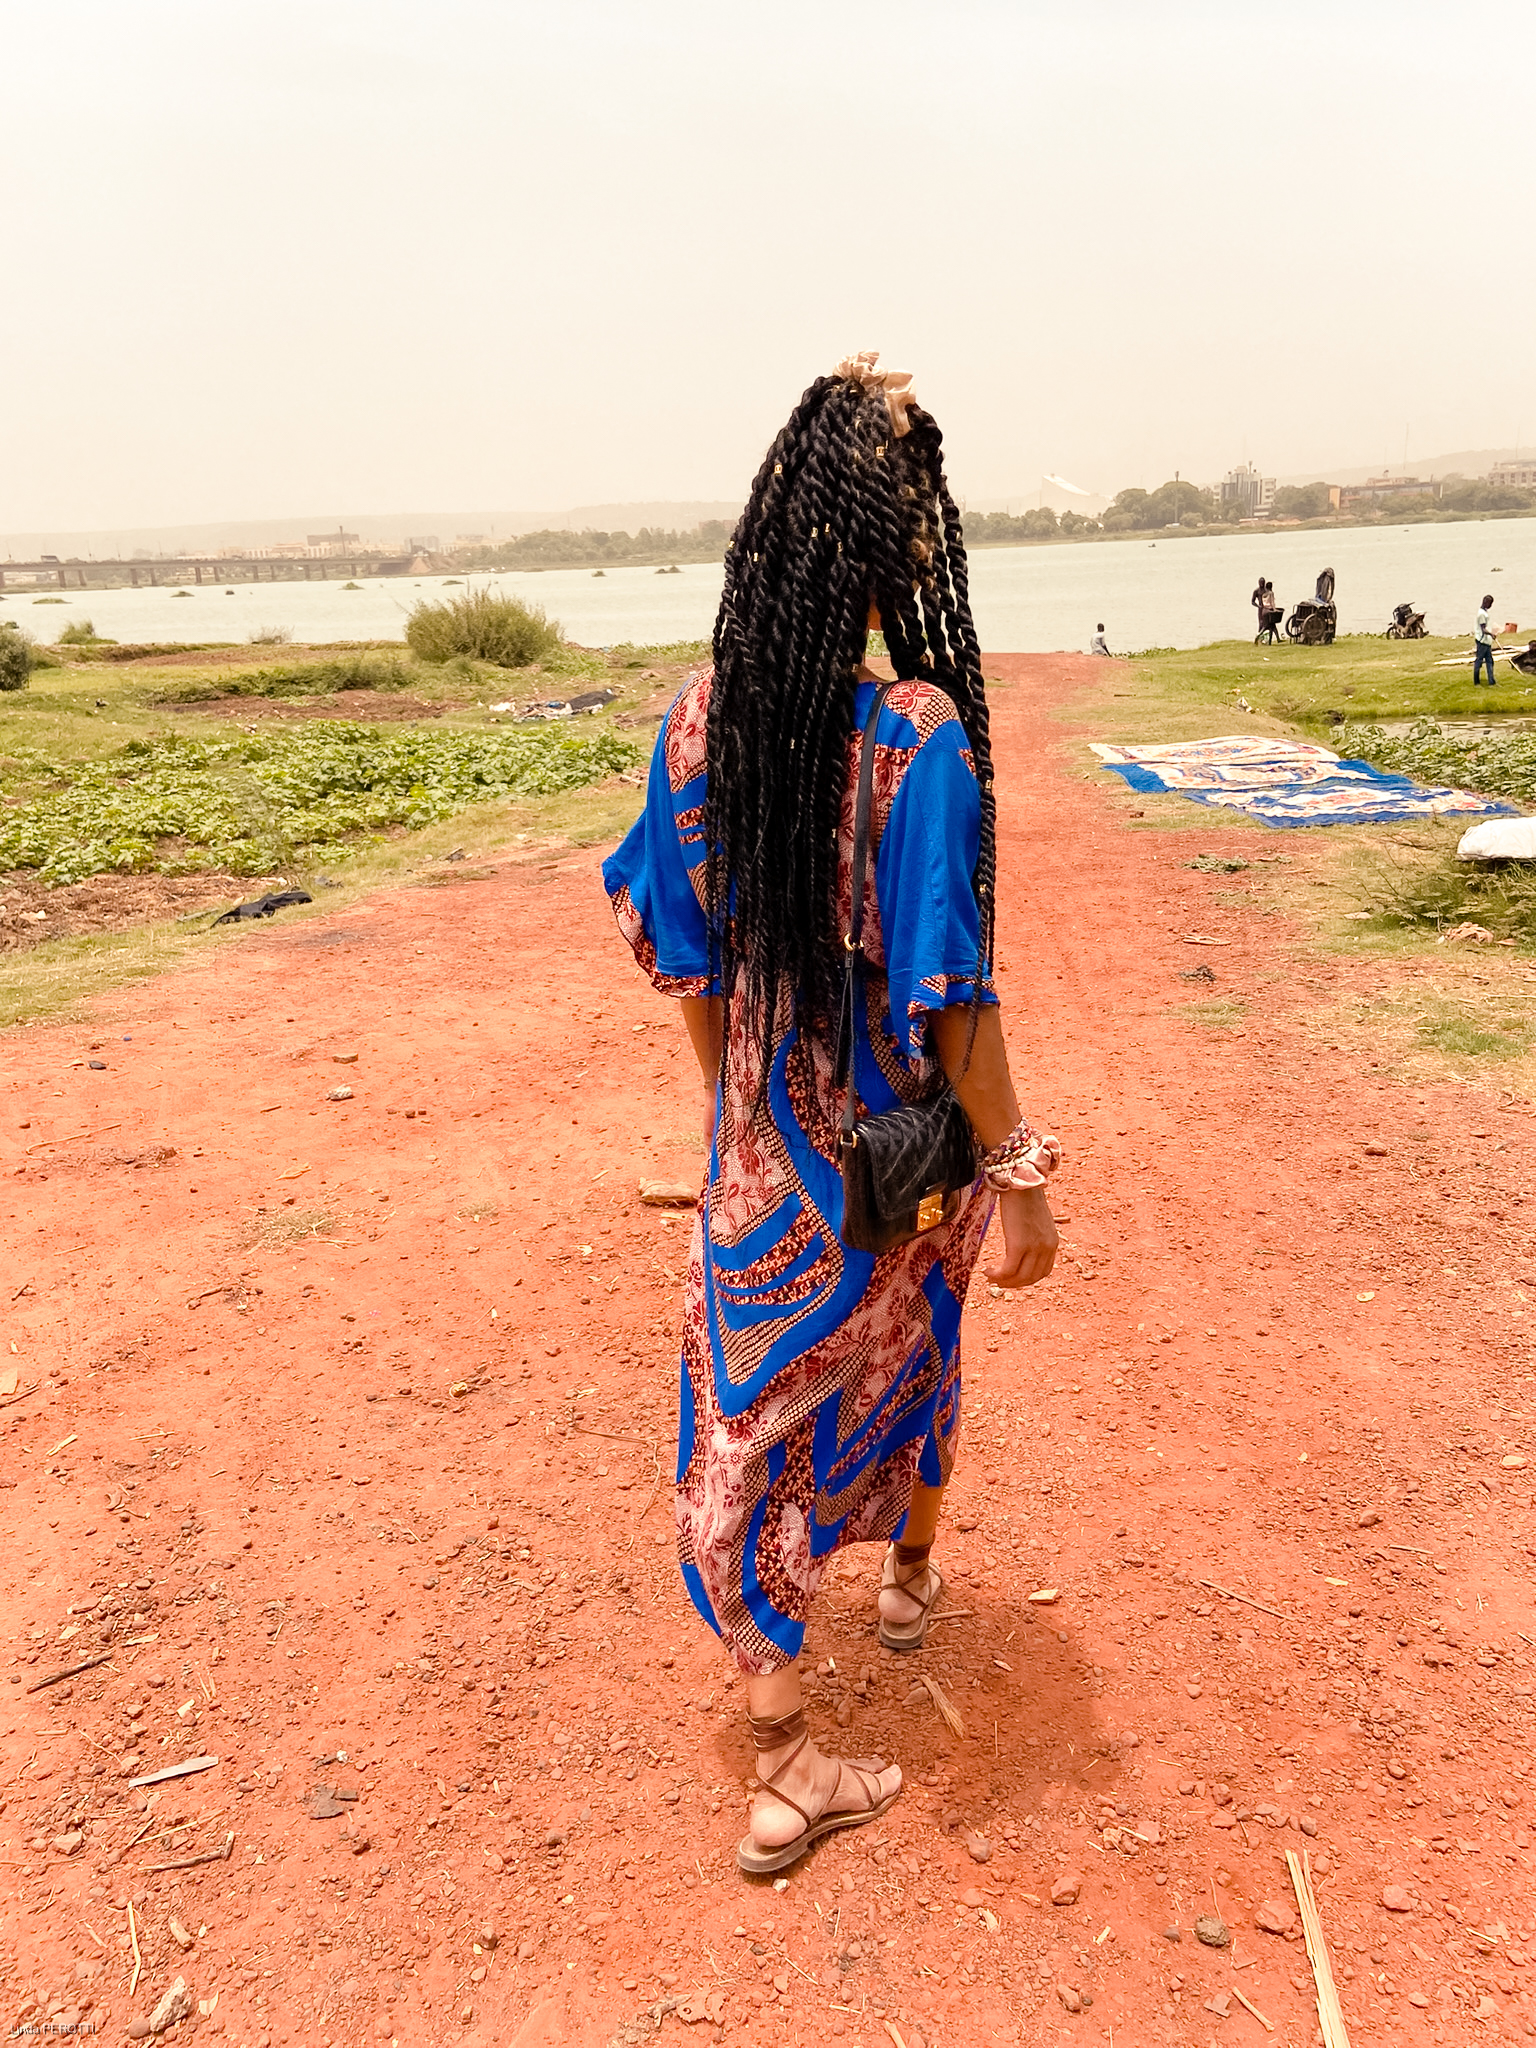 Quel pays d'Afrique visiter : visiter Bamako, Mali